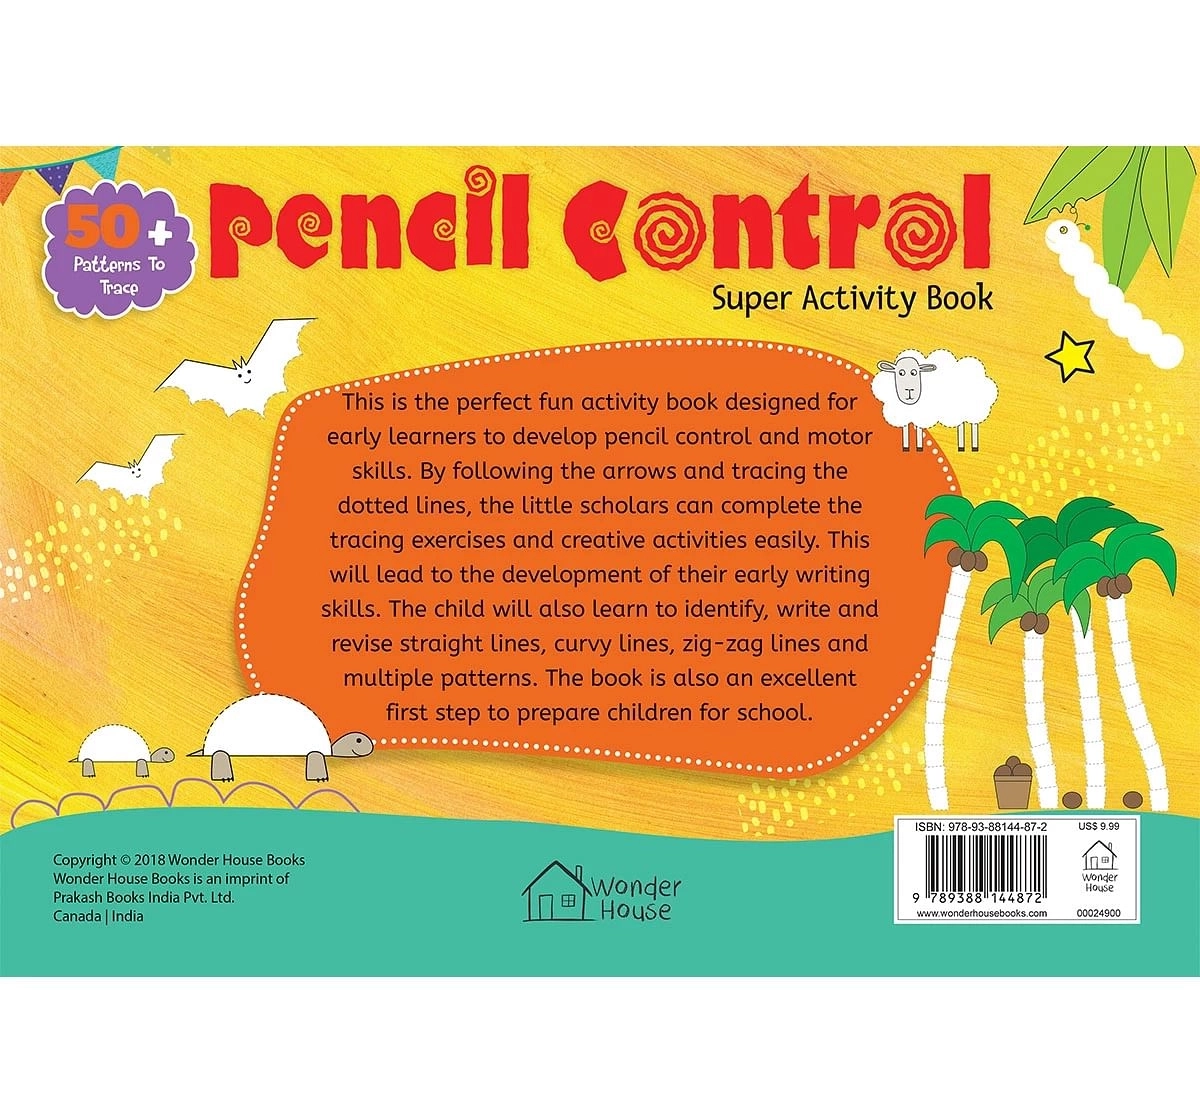 Wonder House Books Pencil Control Super Activity Book for kids 3Y+, Multicolour